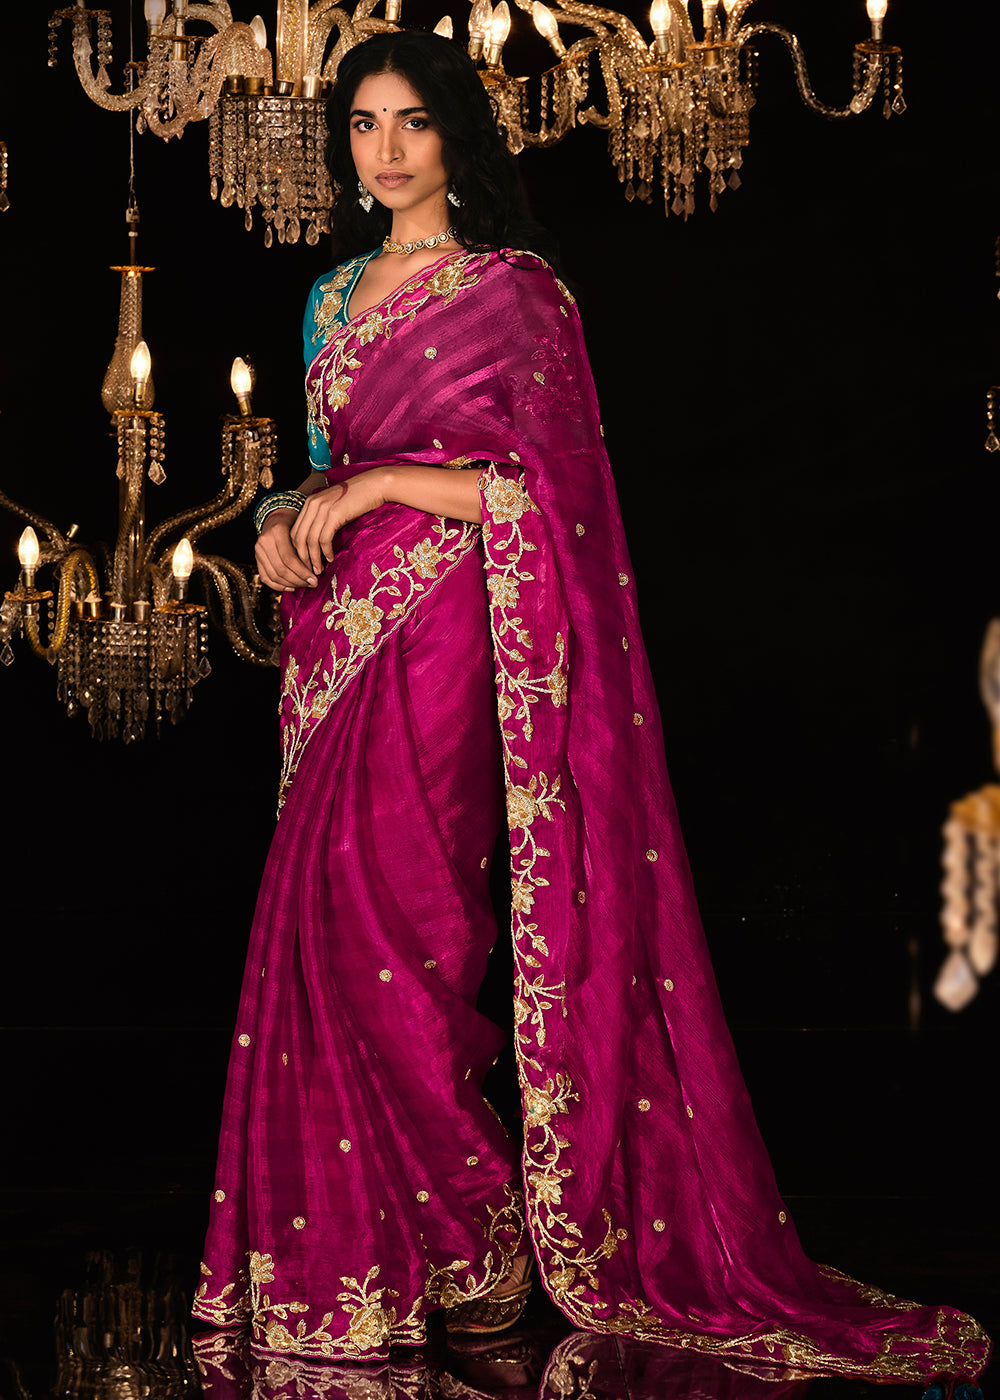 Buy Now Fancy Magenta Pink Embroidered Designer Wedding Wear Saree Online in USA, UK, Canada & Worldwide at Empress Clothing.